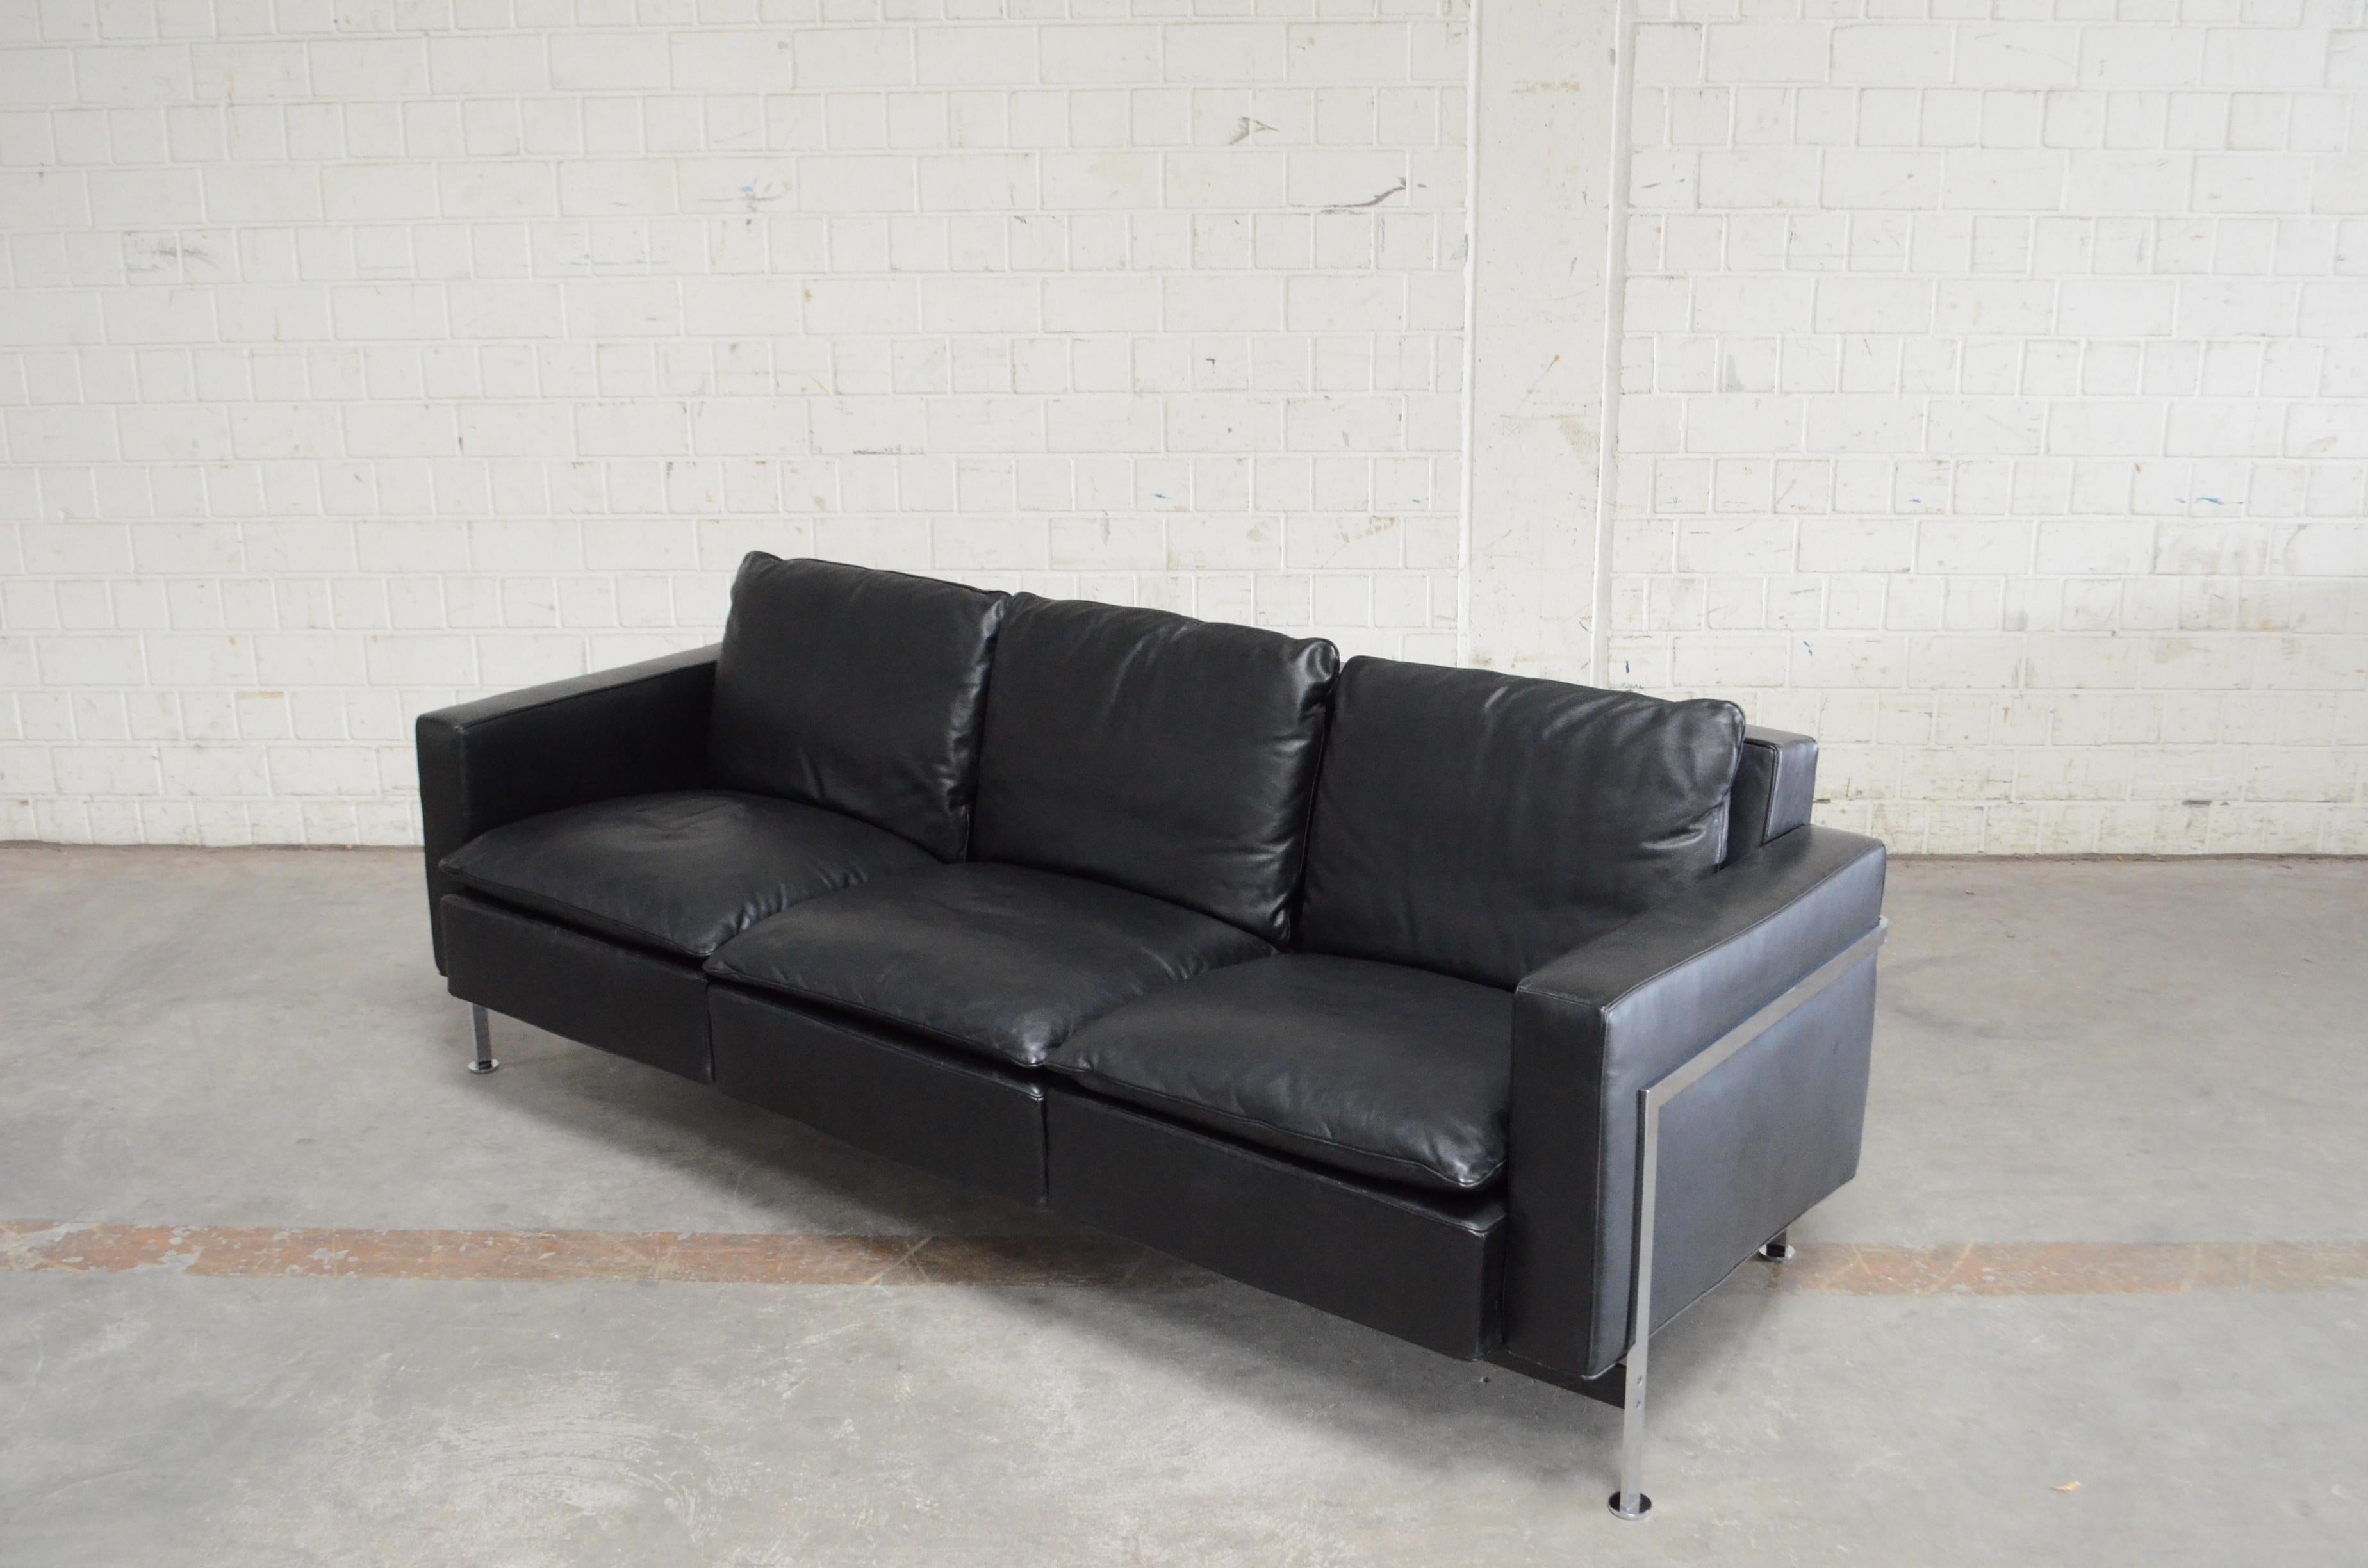 Robert Haussmann for Hans Kaufeld or De Sede RH 302 Leather Sofa First Edition For Sale 4